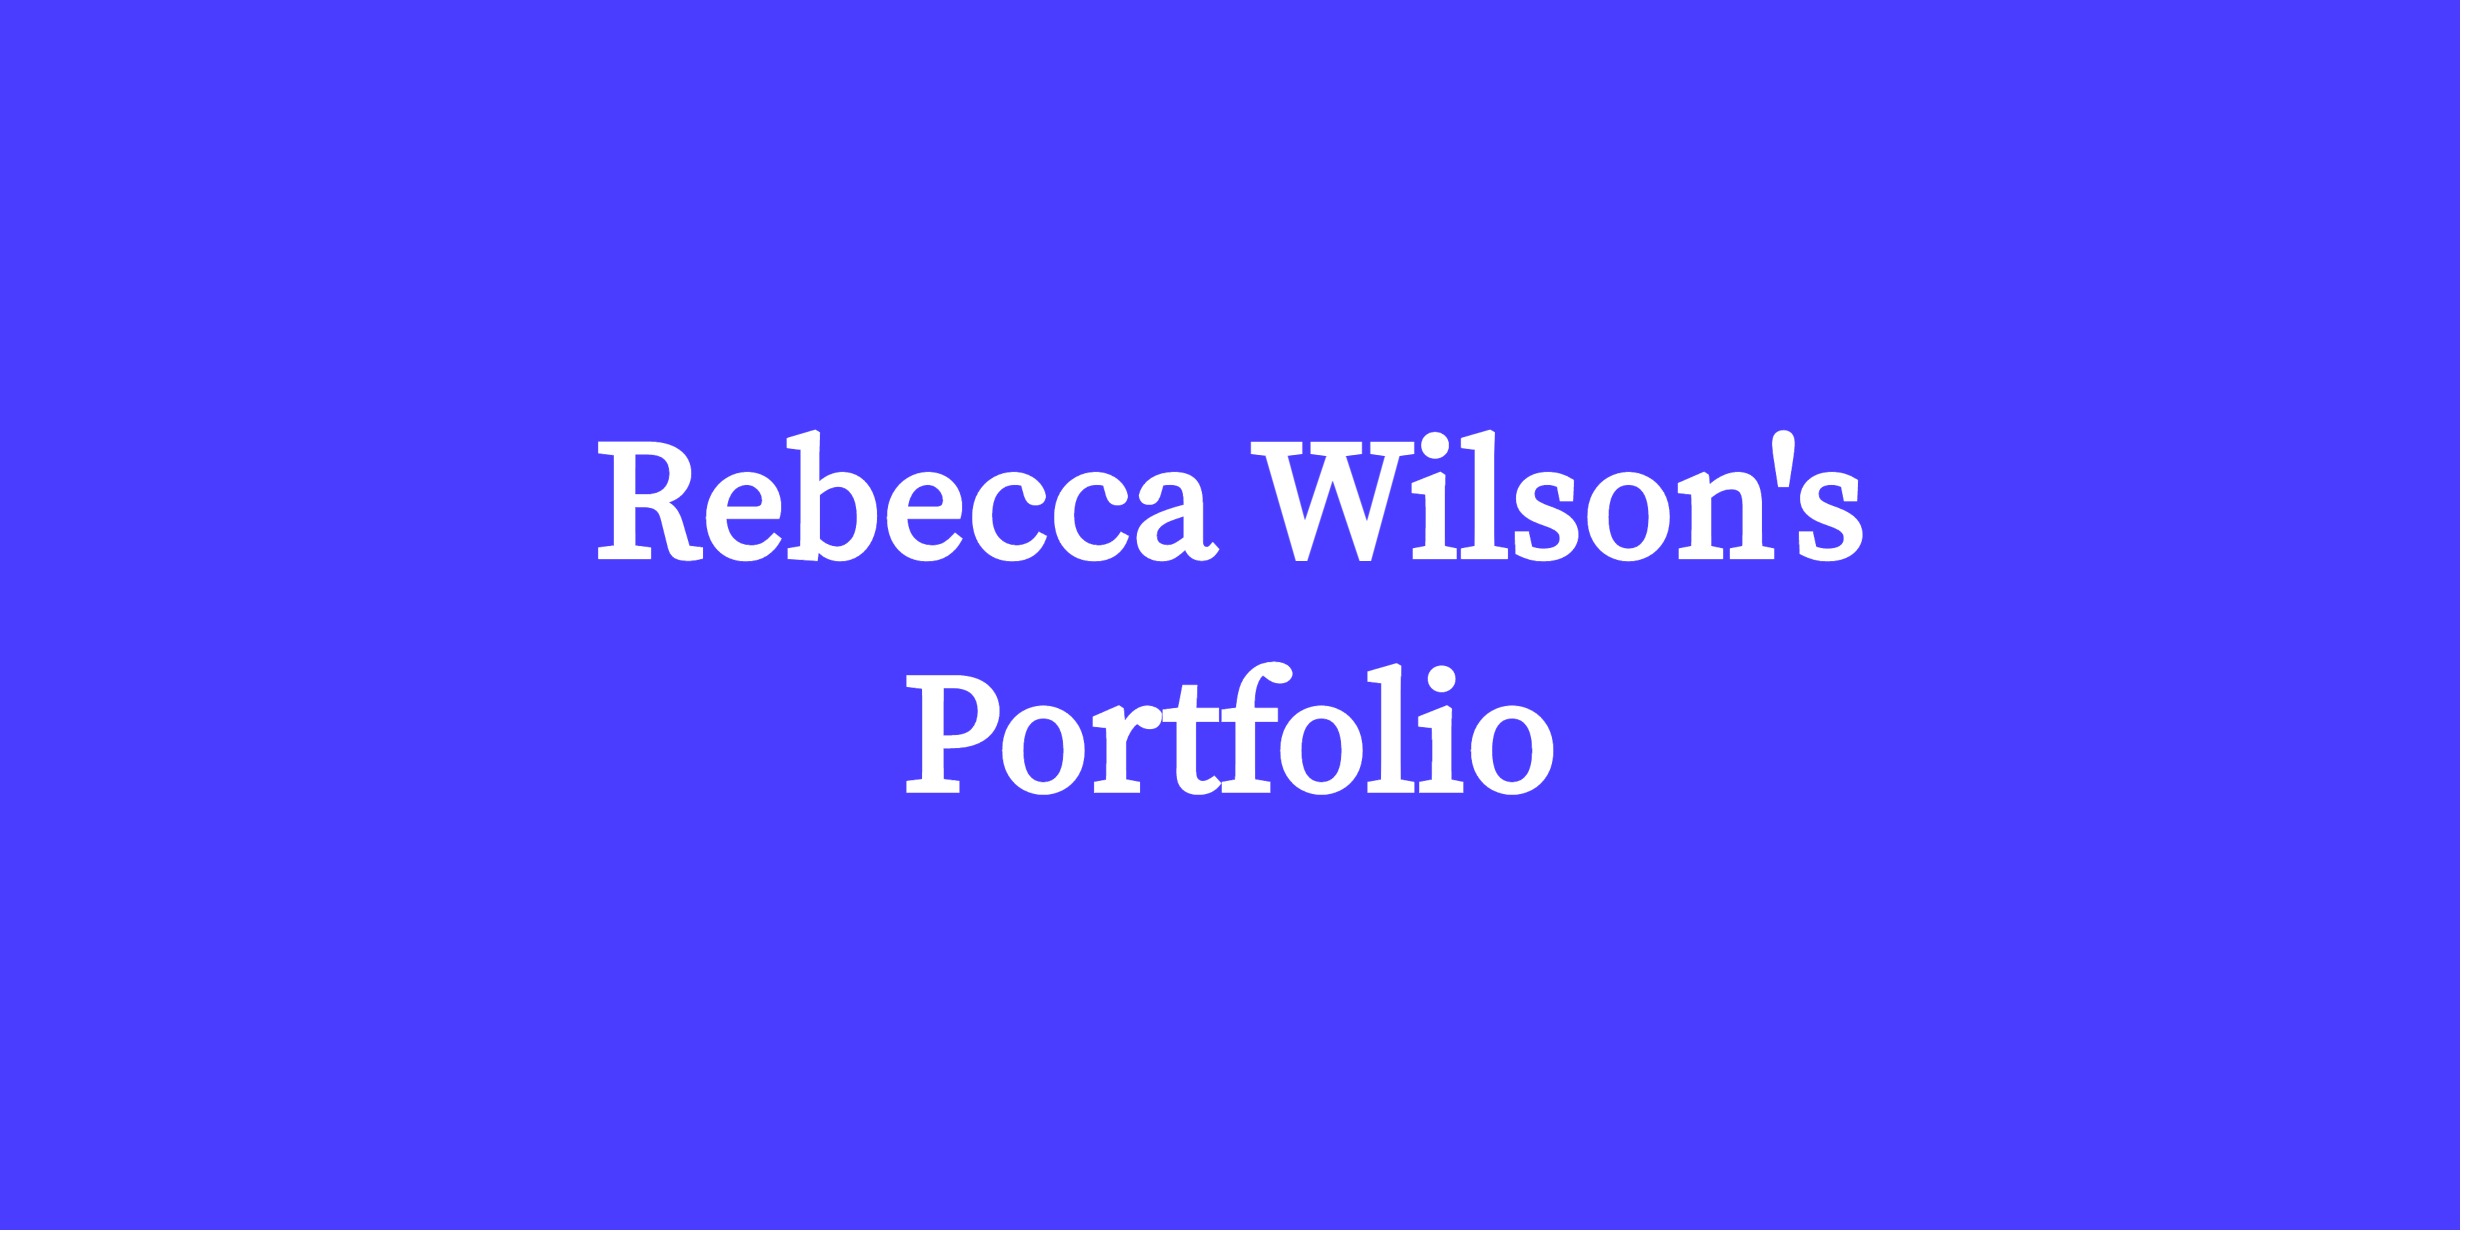 Rebecca Wilson's
Portfolio